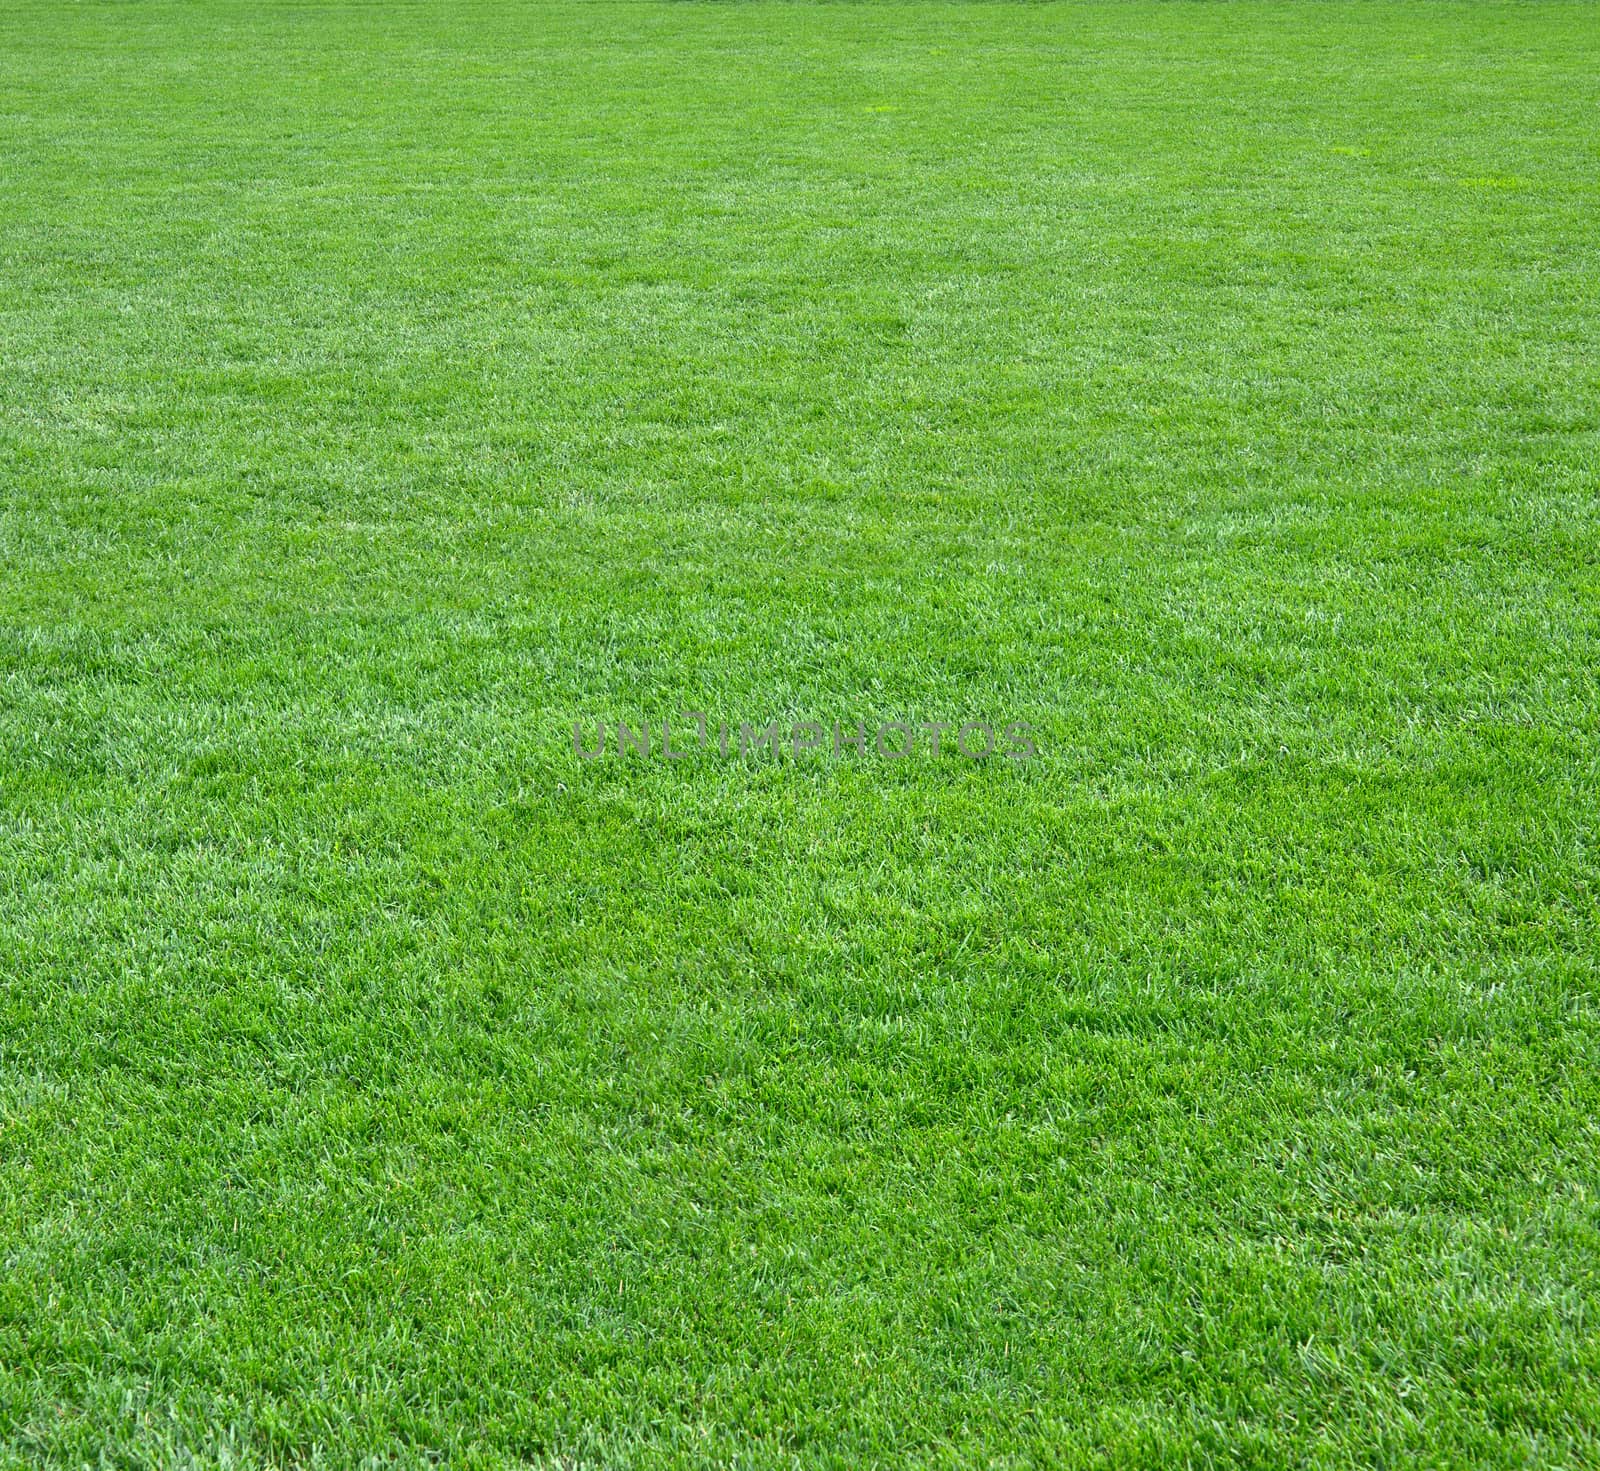 Pure empty green grass field cut square shape